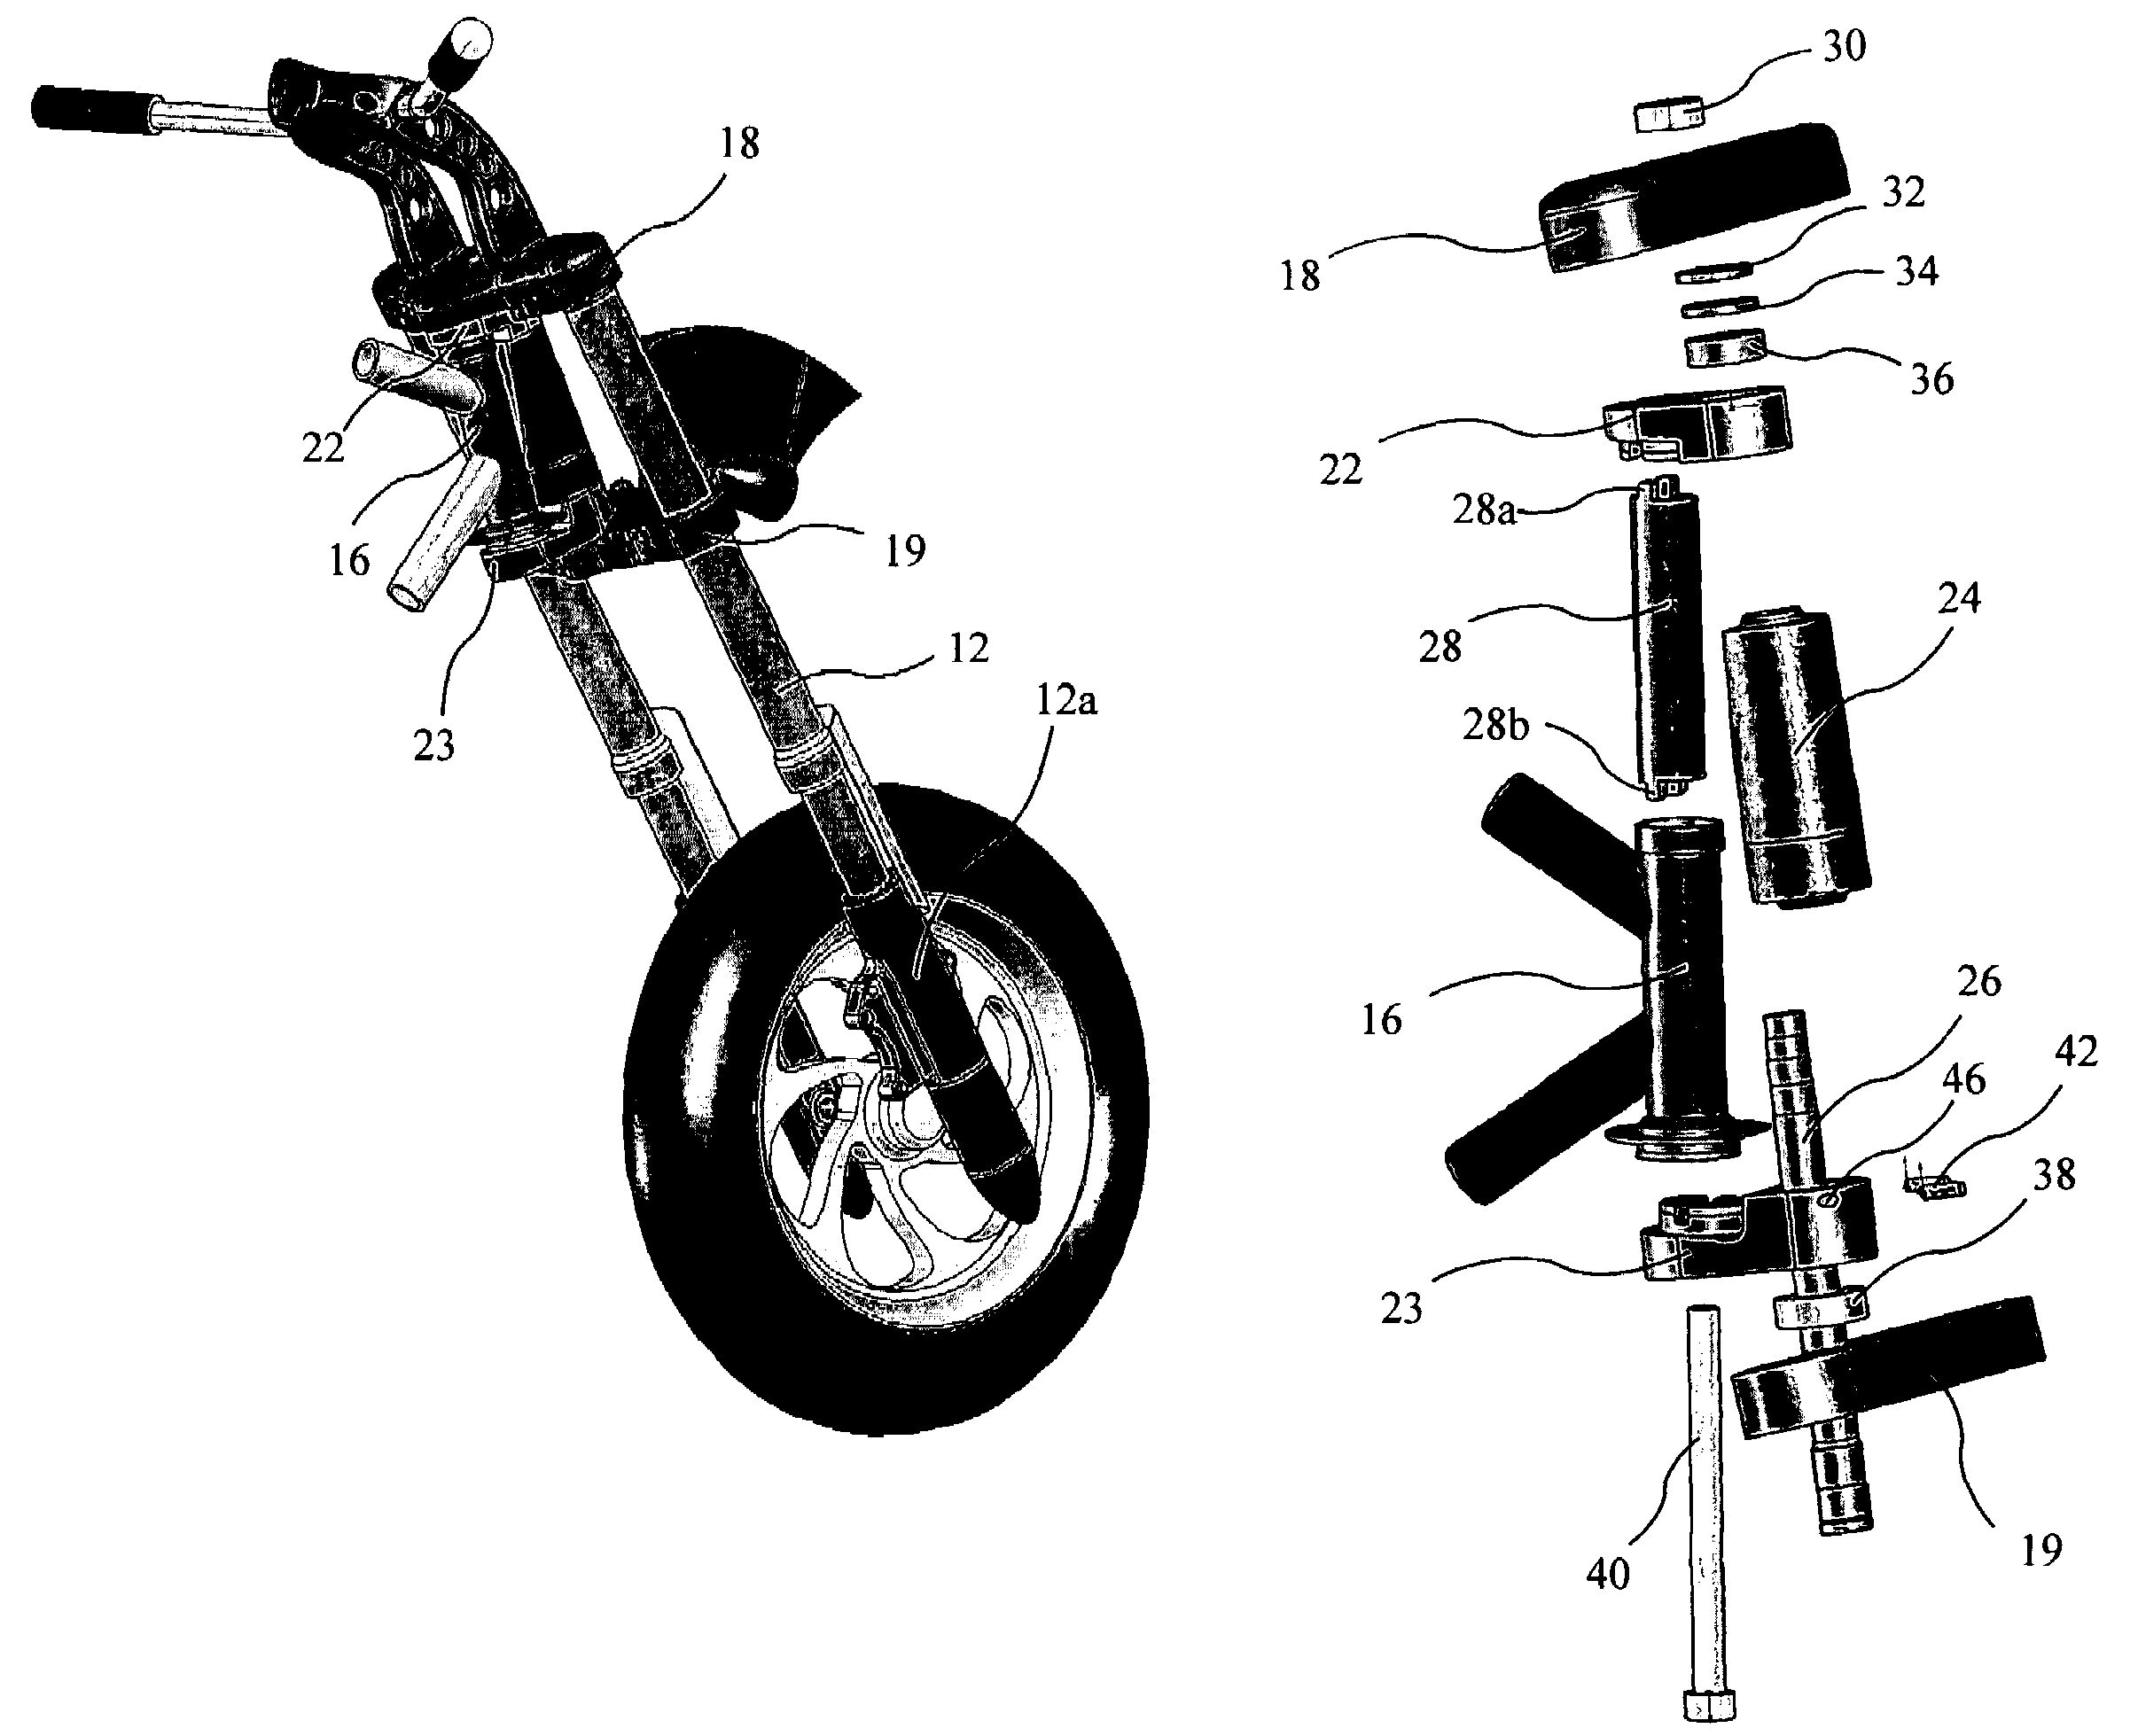 Motorcycle rake and trail adjuster